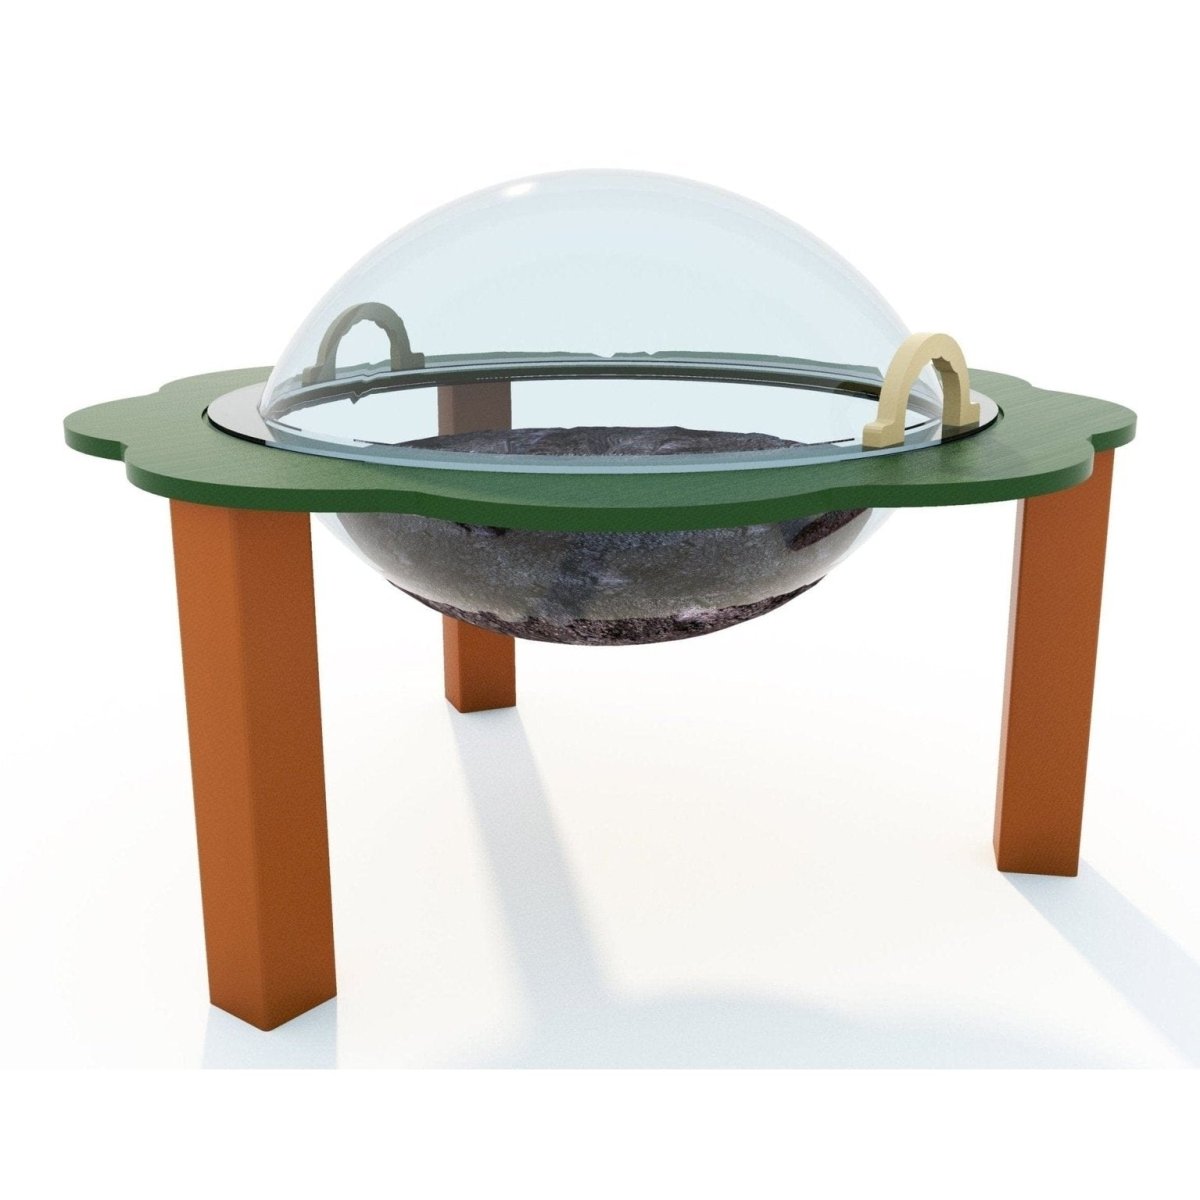 TerraDome Nature Bowl with Lids - Sensory Table - Playtopia, Inc.